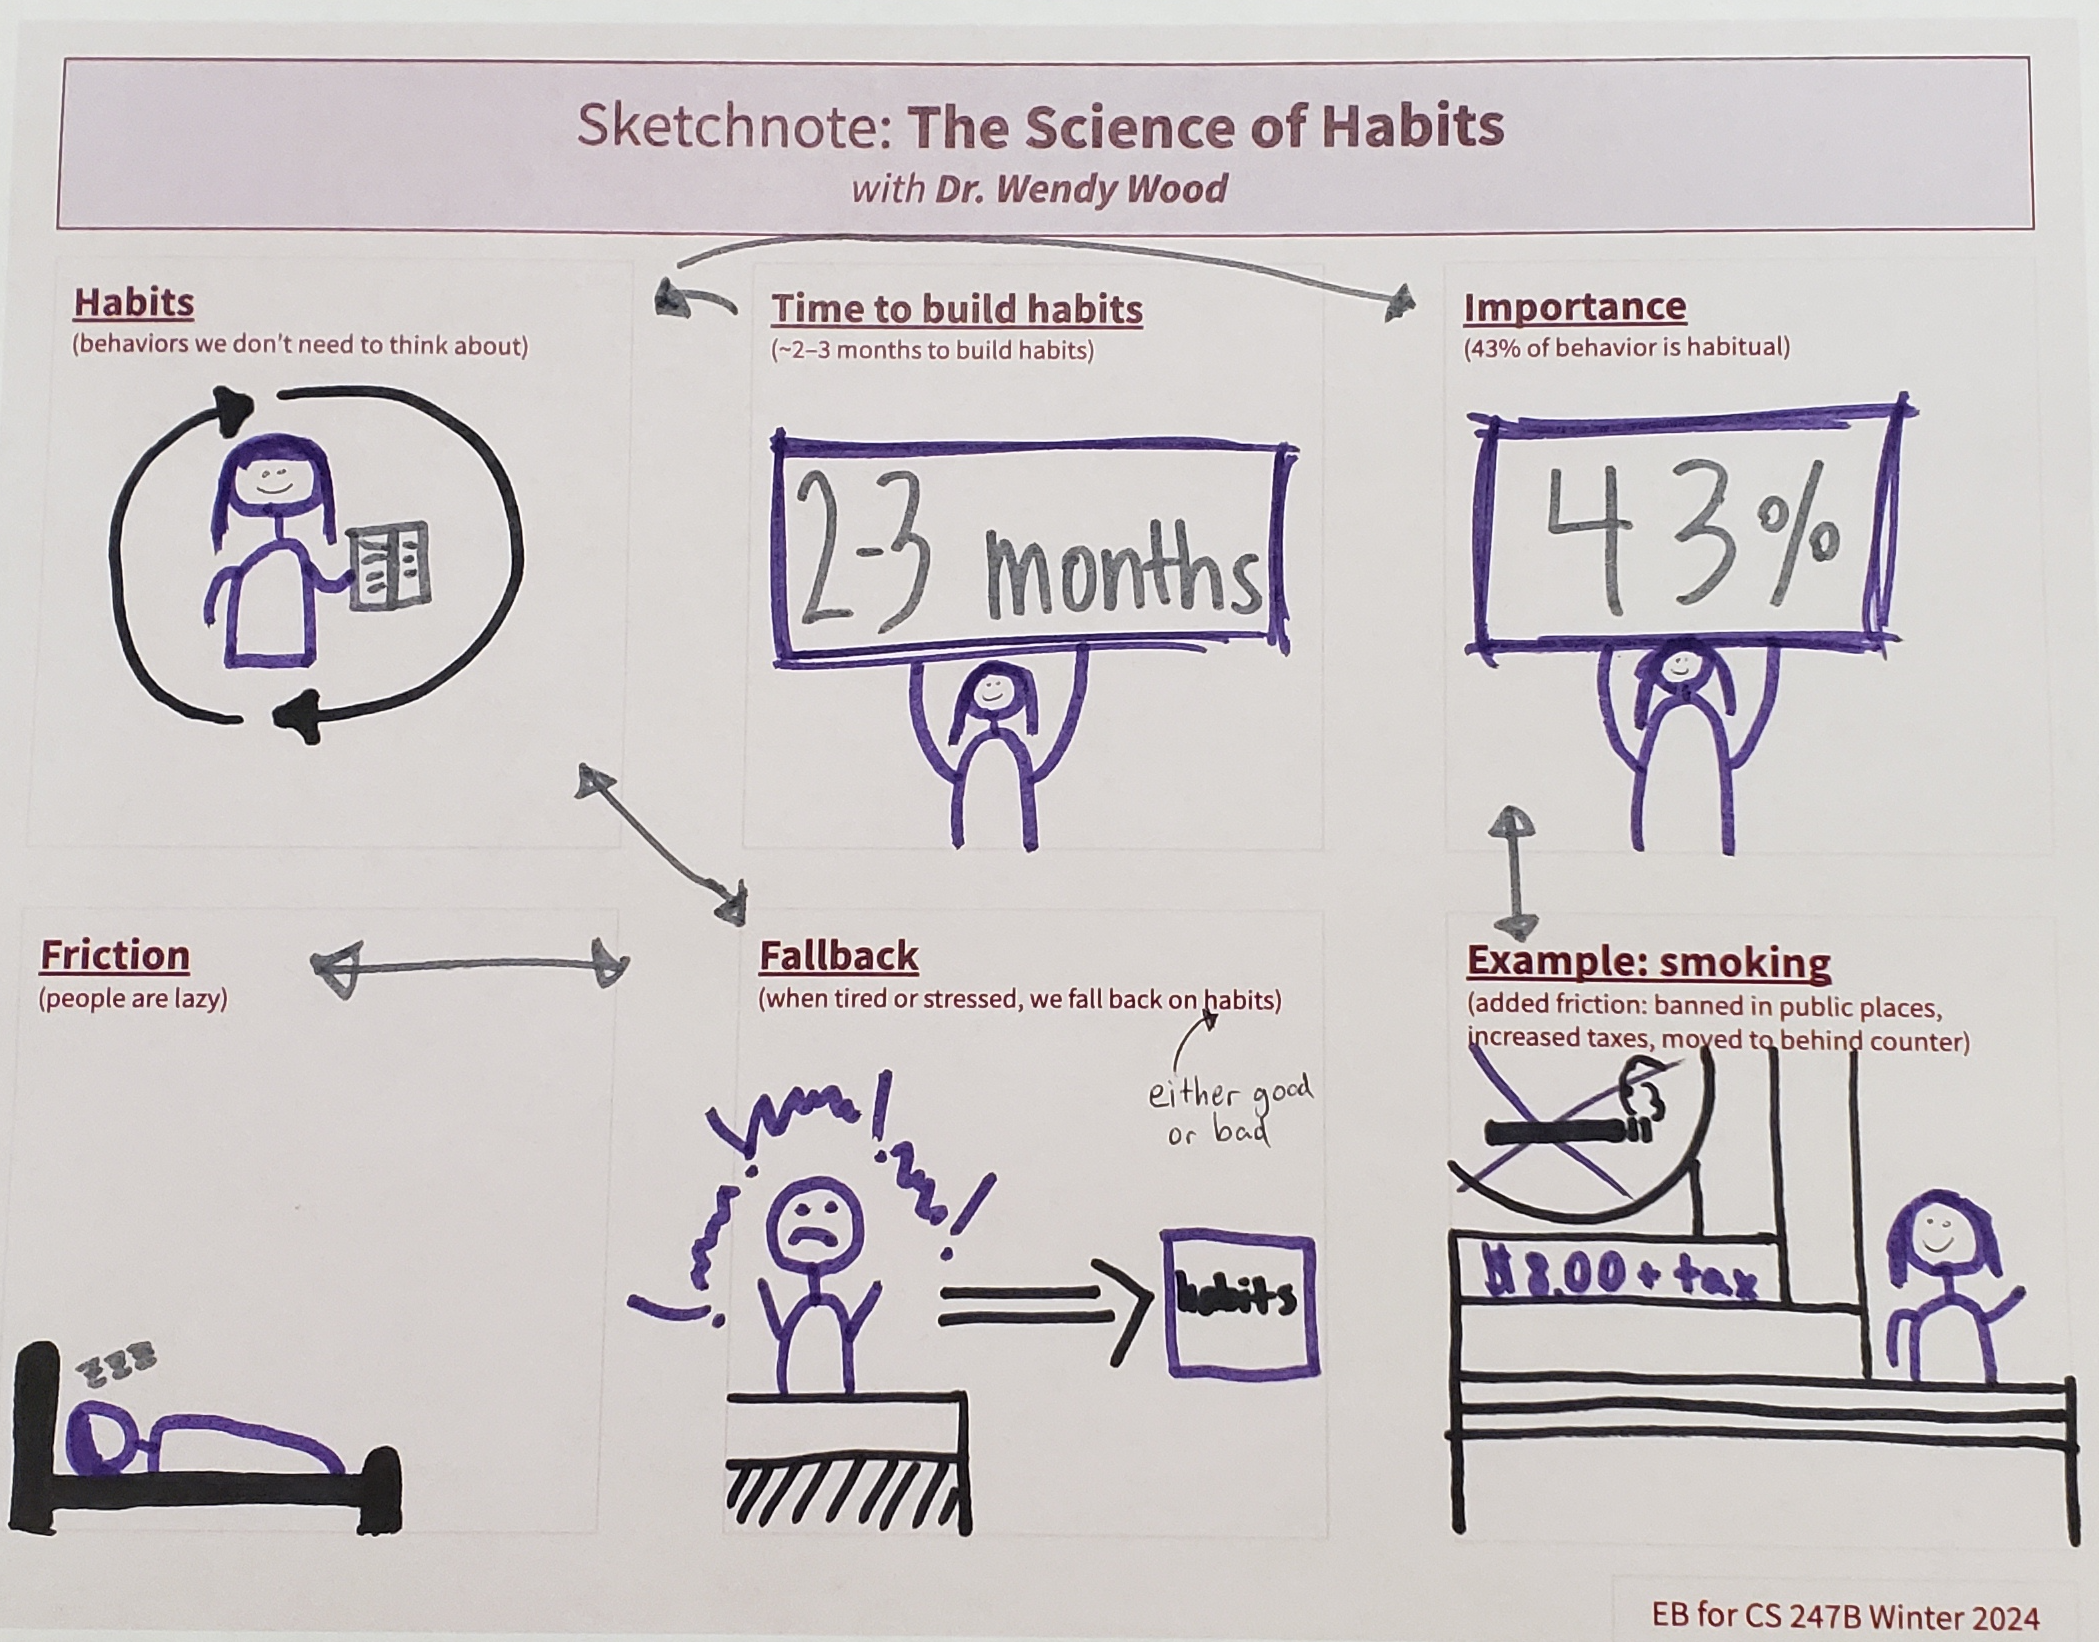 EB's sketchnote #2 for science of habits